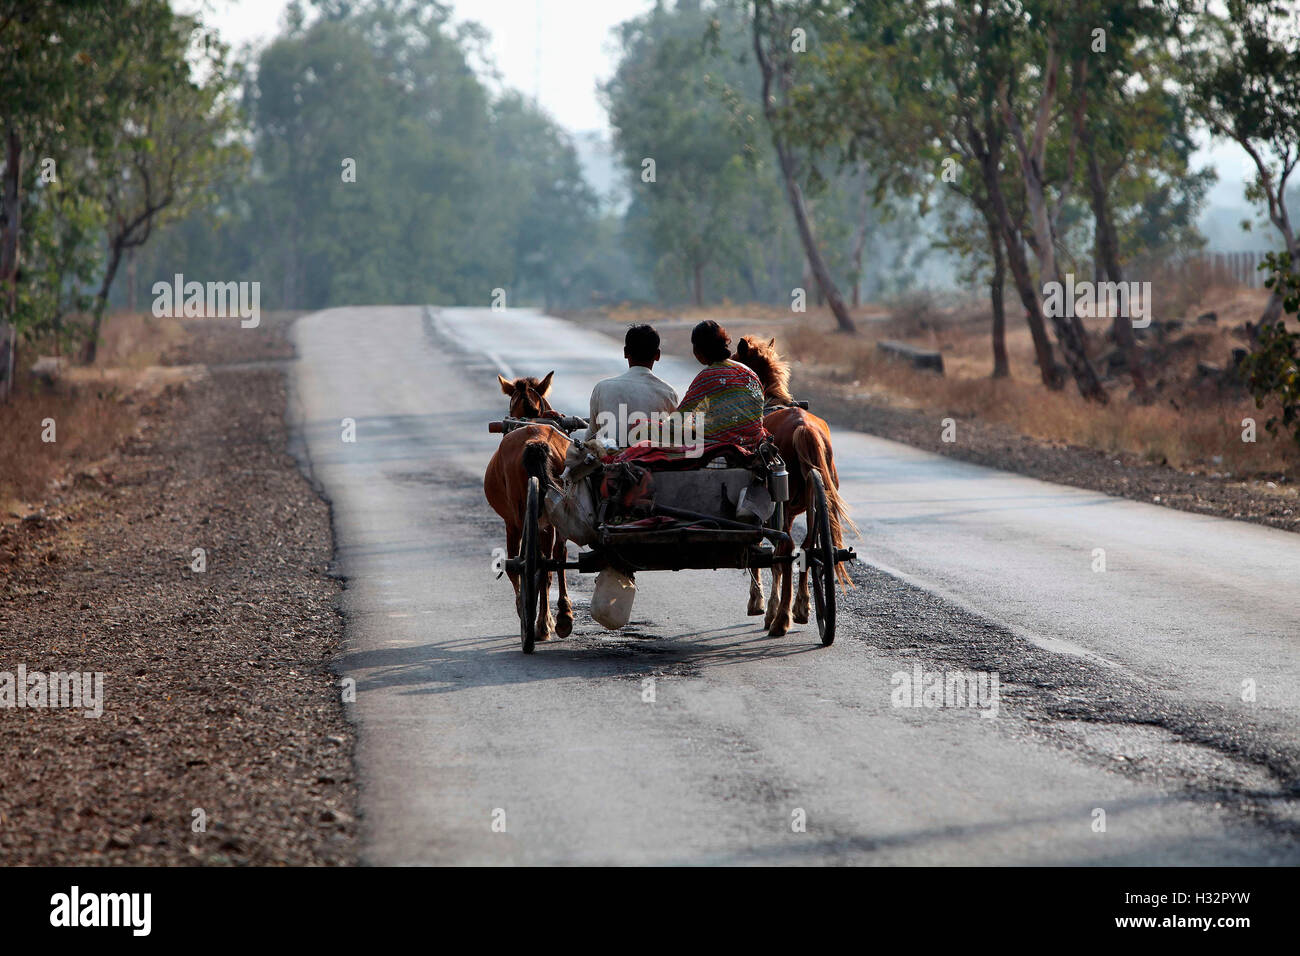 Hotrse cart on road, Aurangabad, Maharashtra, India Stock Photo